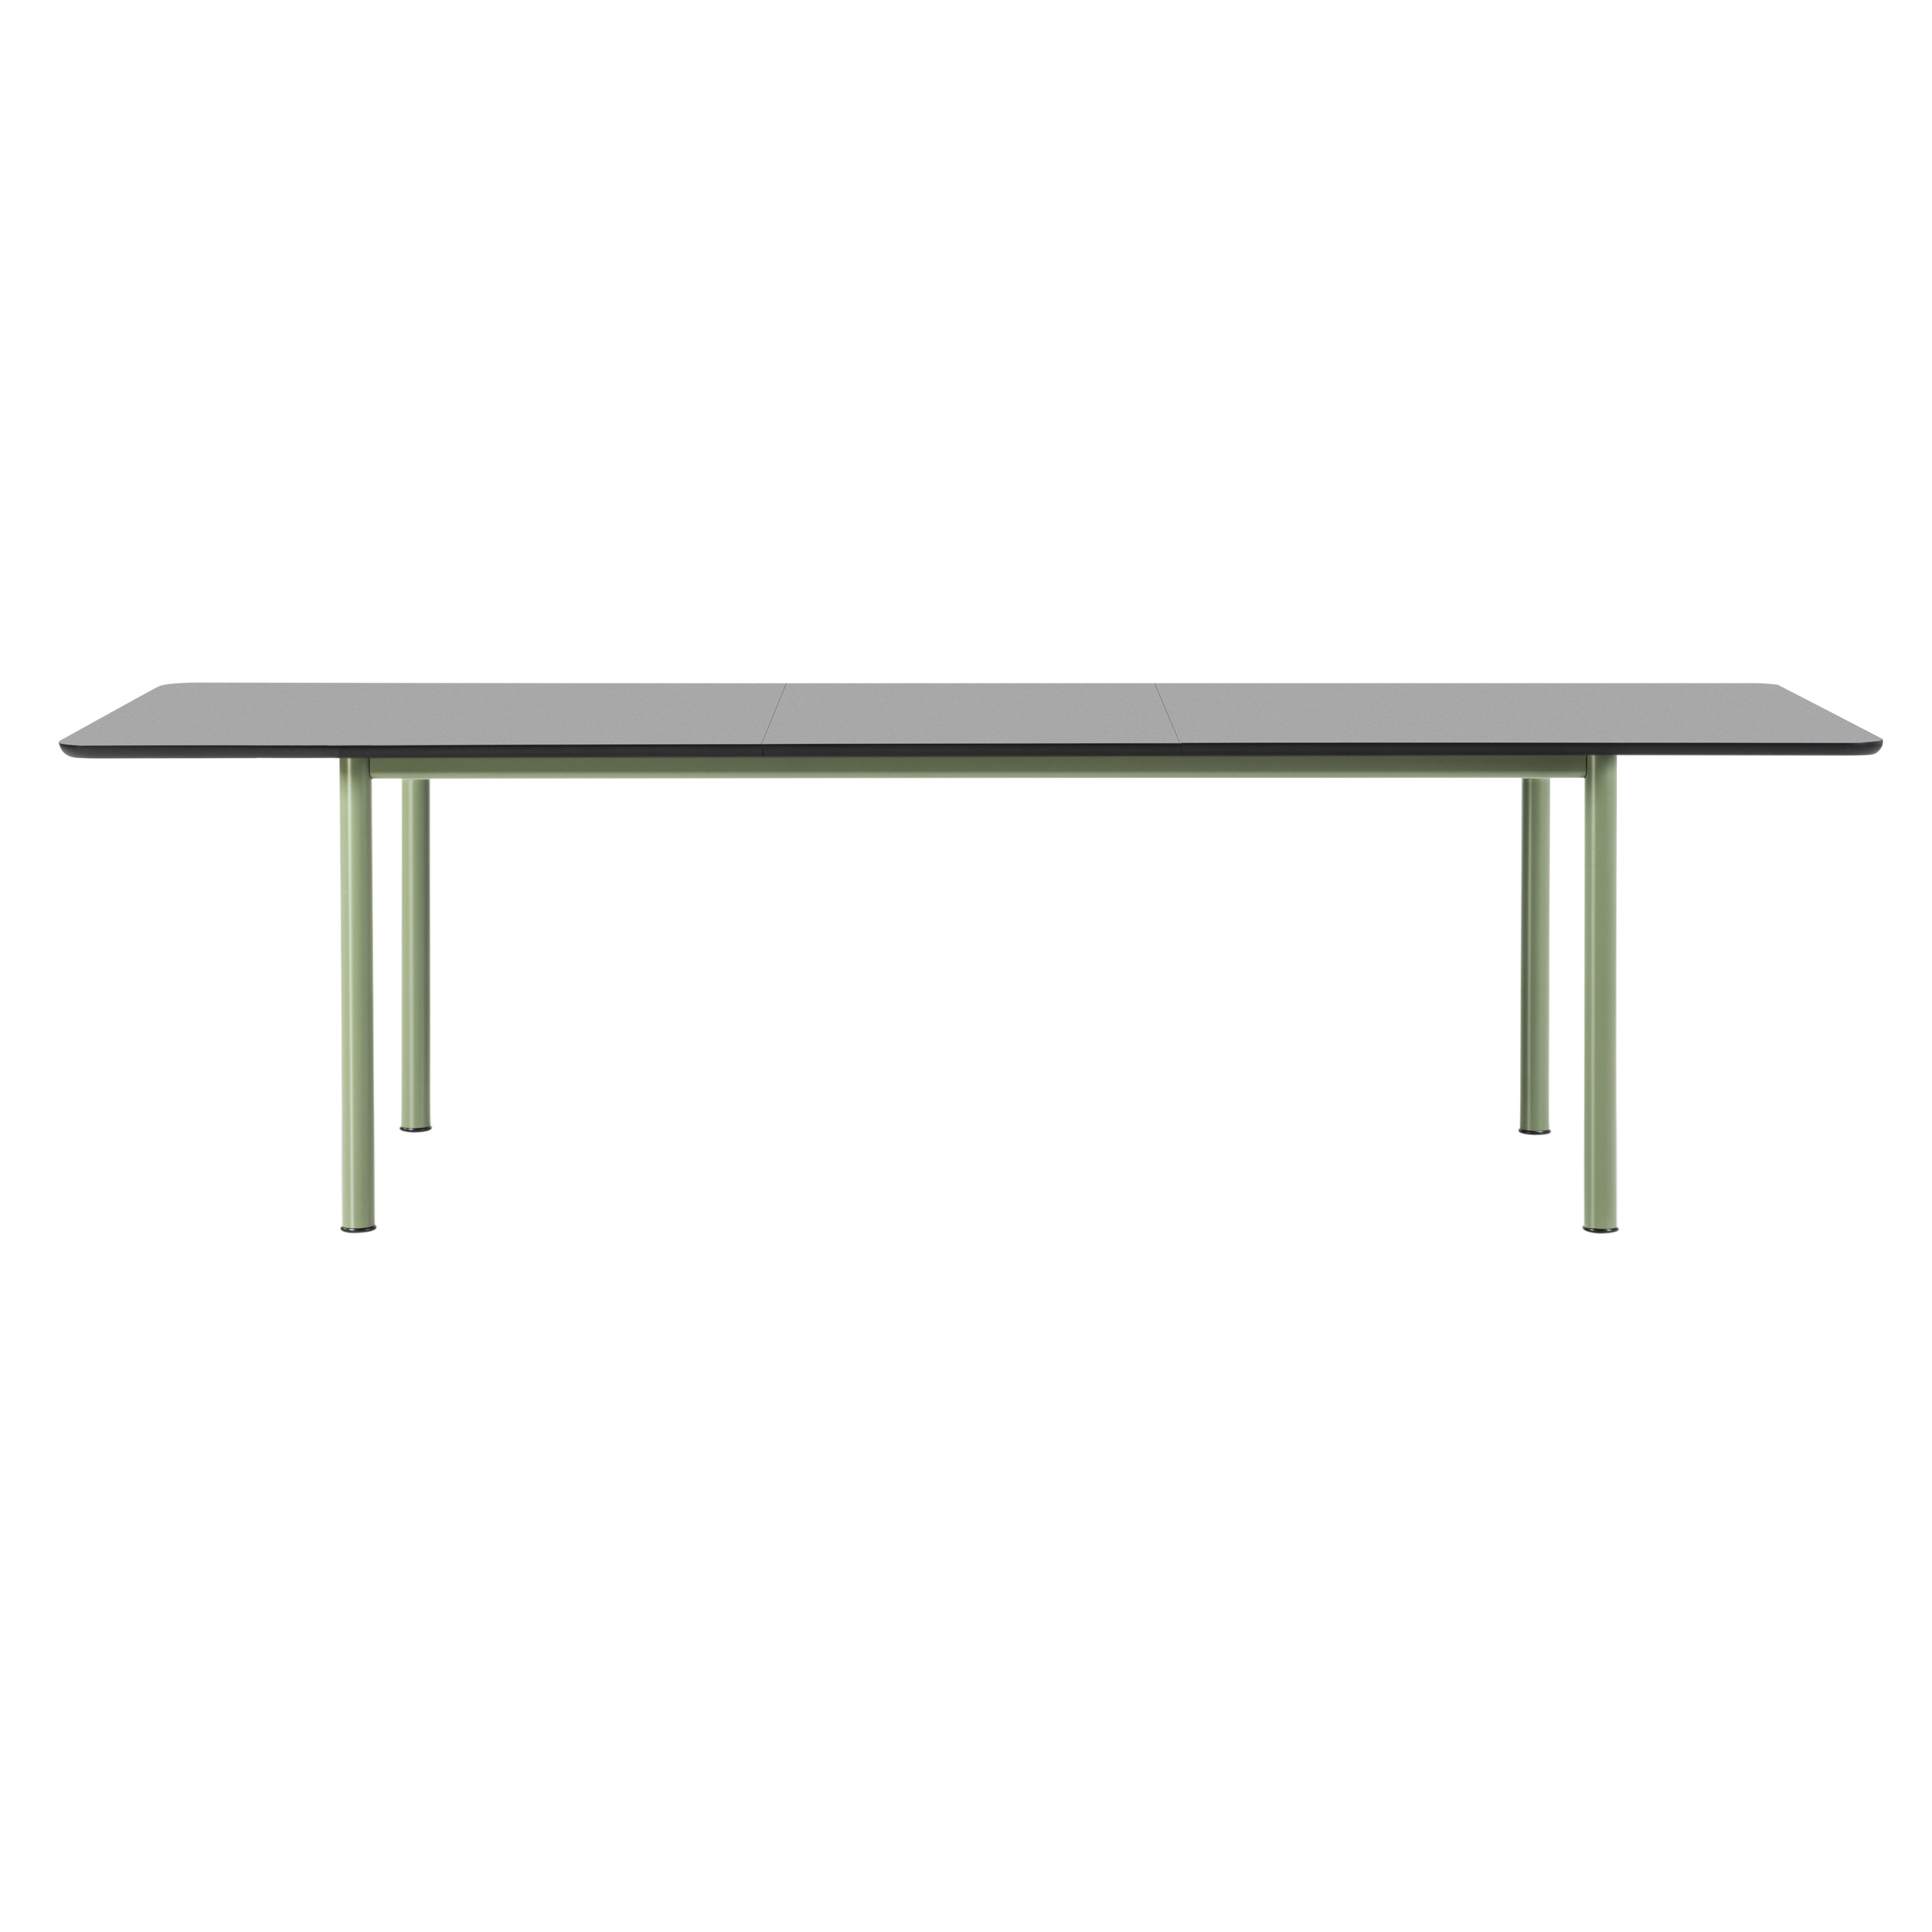 Plan Extendable Table: Black Laminate + Modernist Green